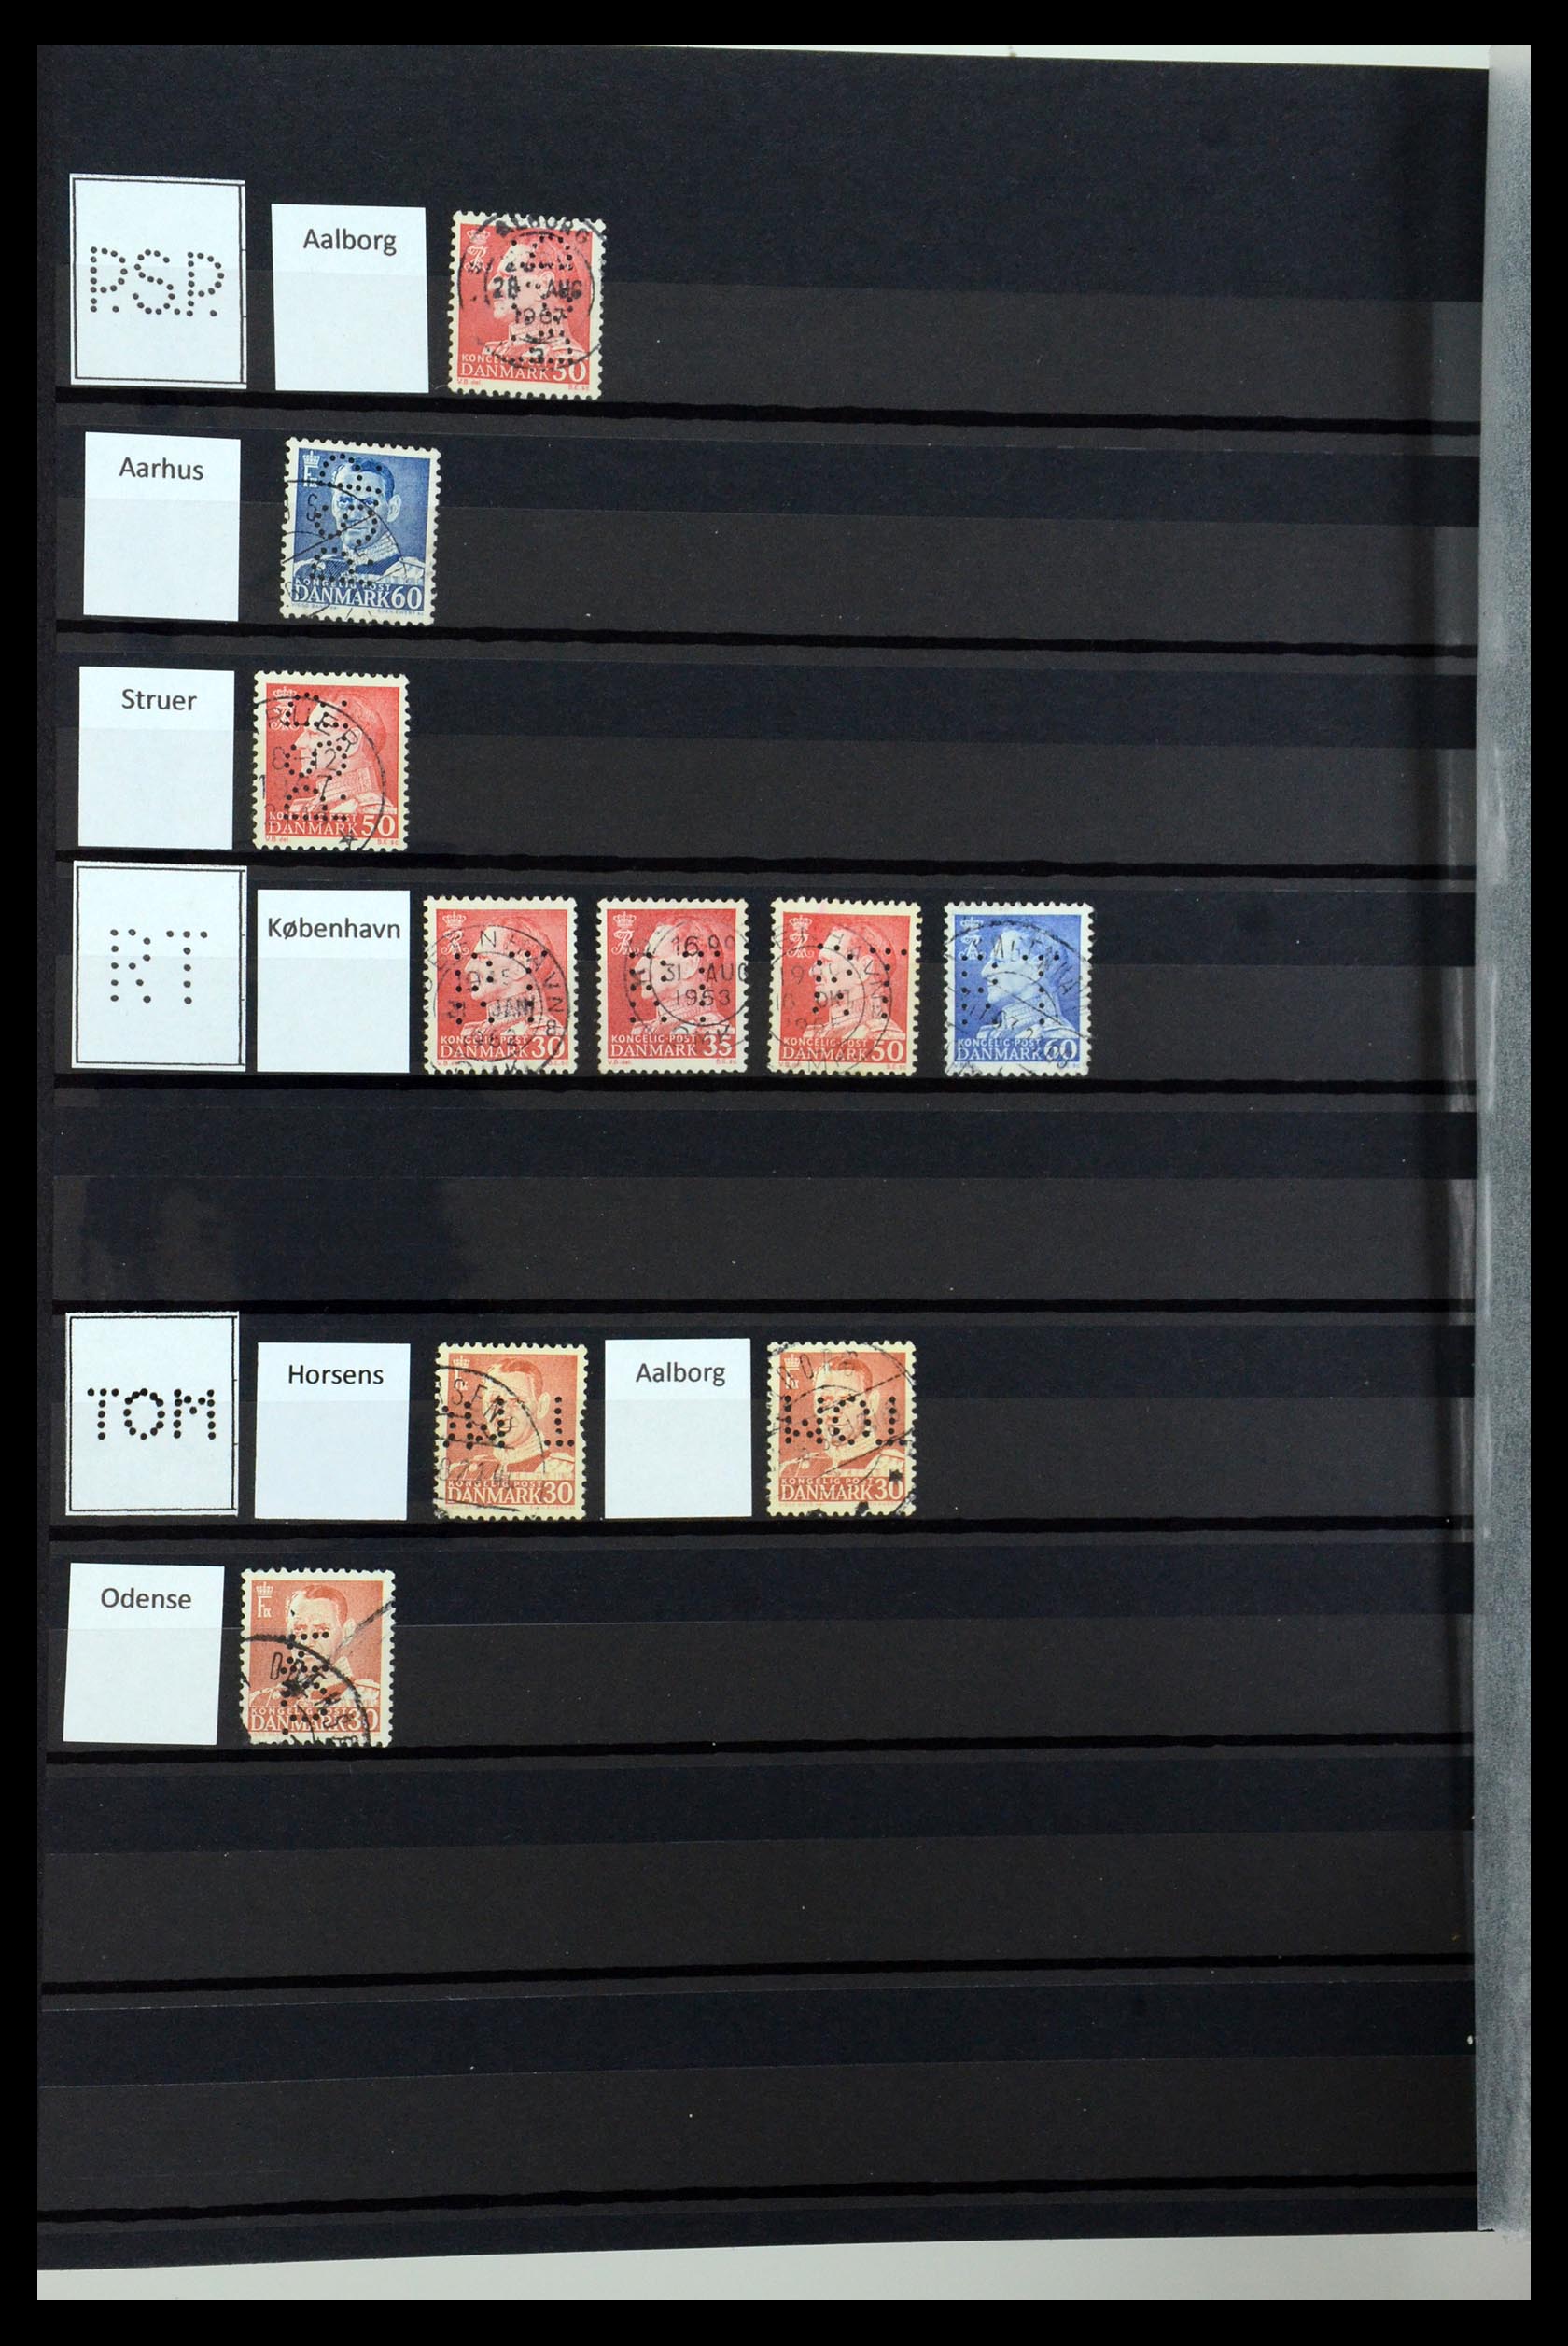 36396 103 - Stamp collection 36396 Denmark perfins.